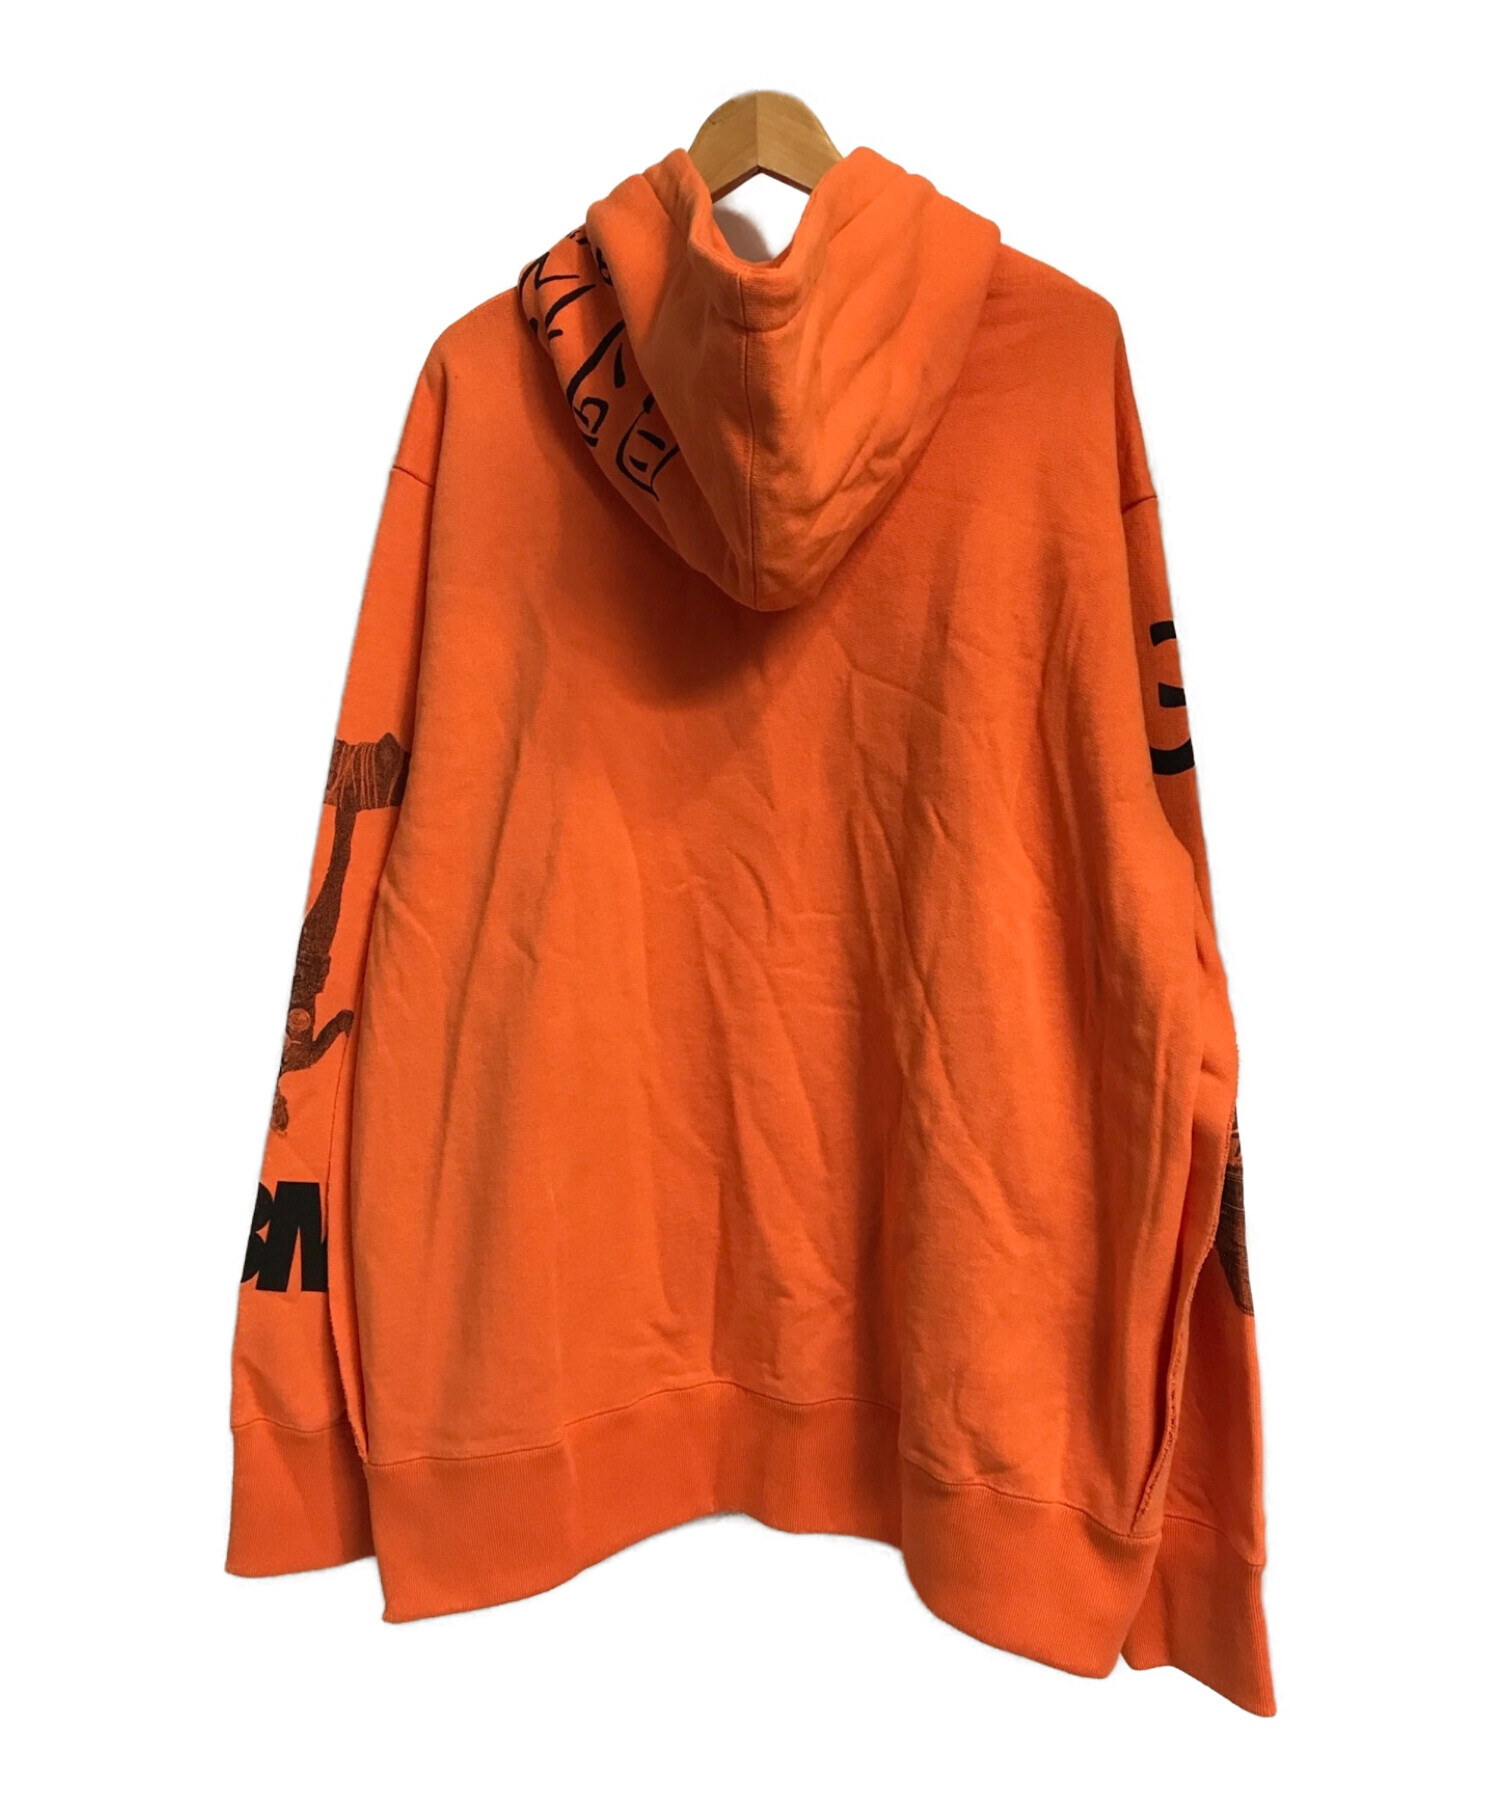 Black Weirdos (ブラック ウィドー) Hooded Sweatshirt オレンジ サイズ:XL